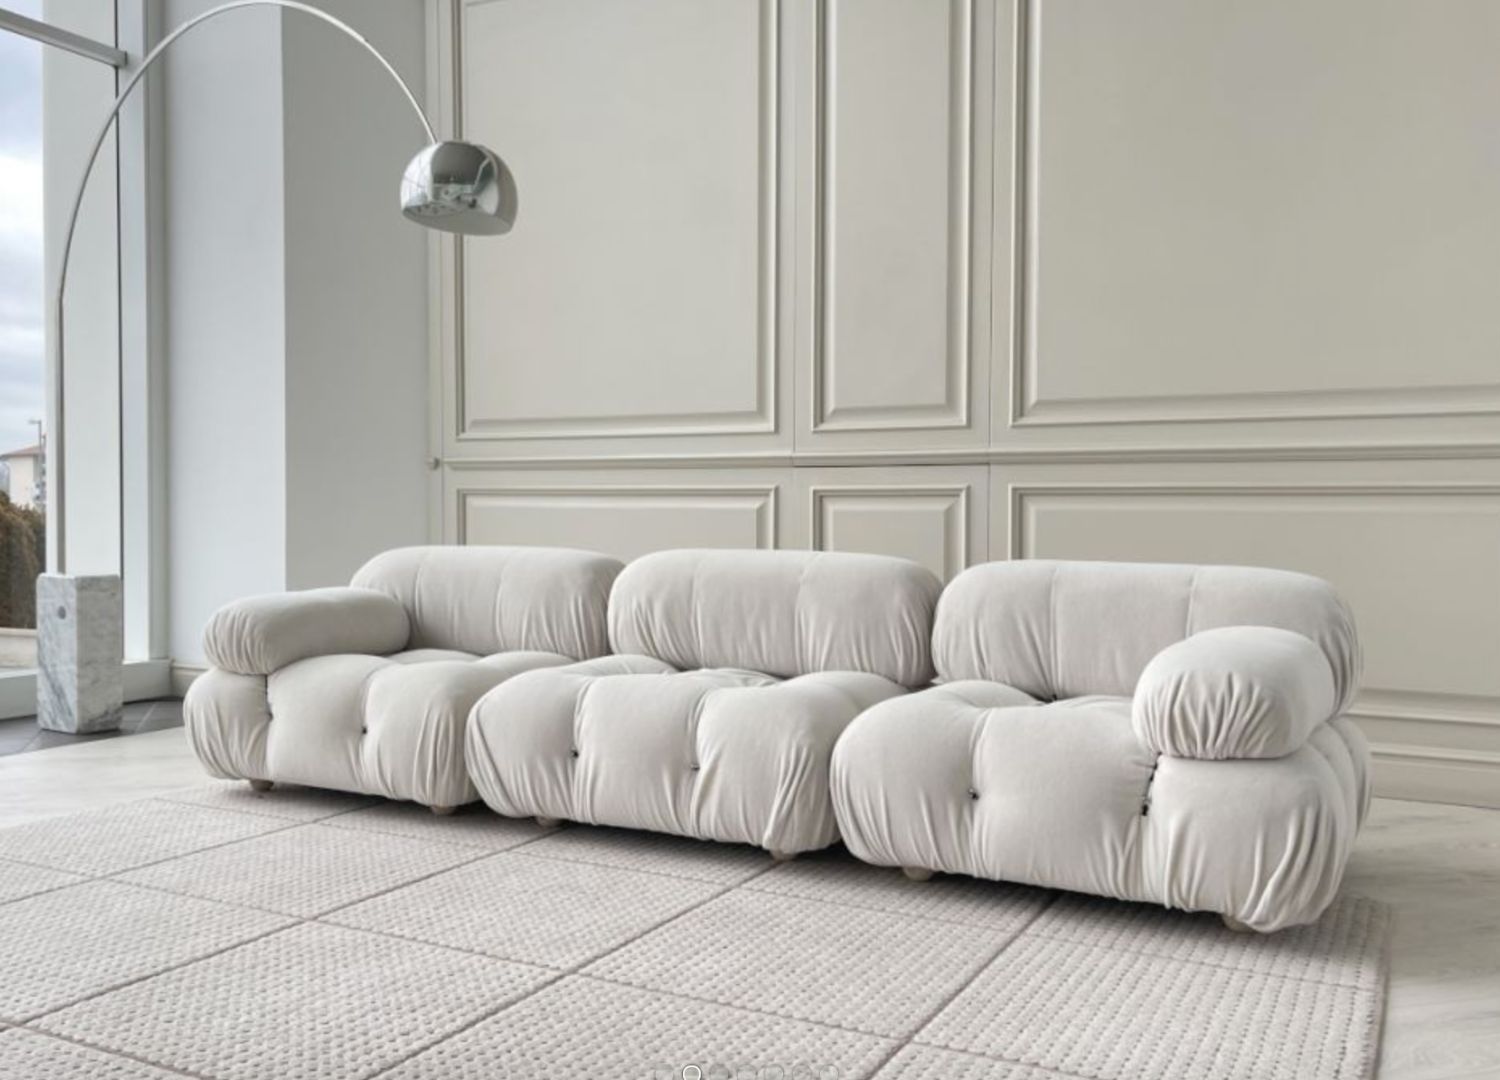 11 Modular Sofas That Look And Feel Good Designwanted